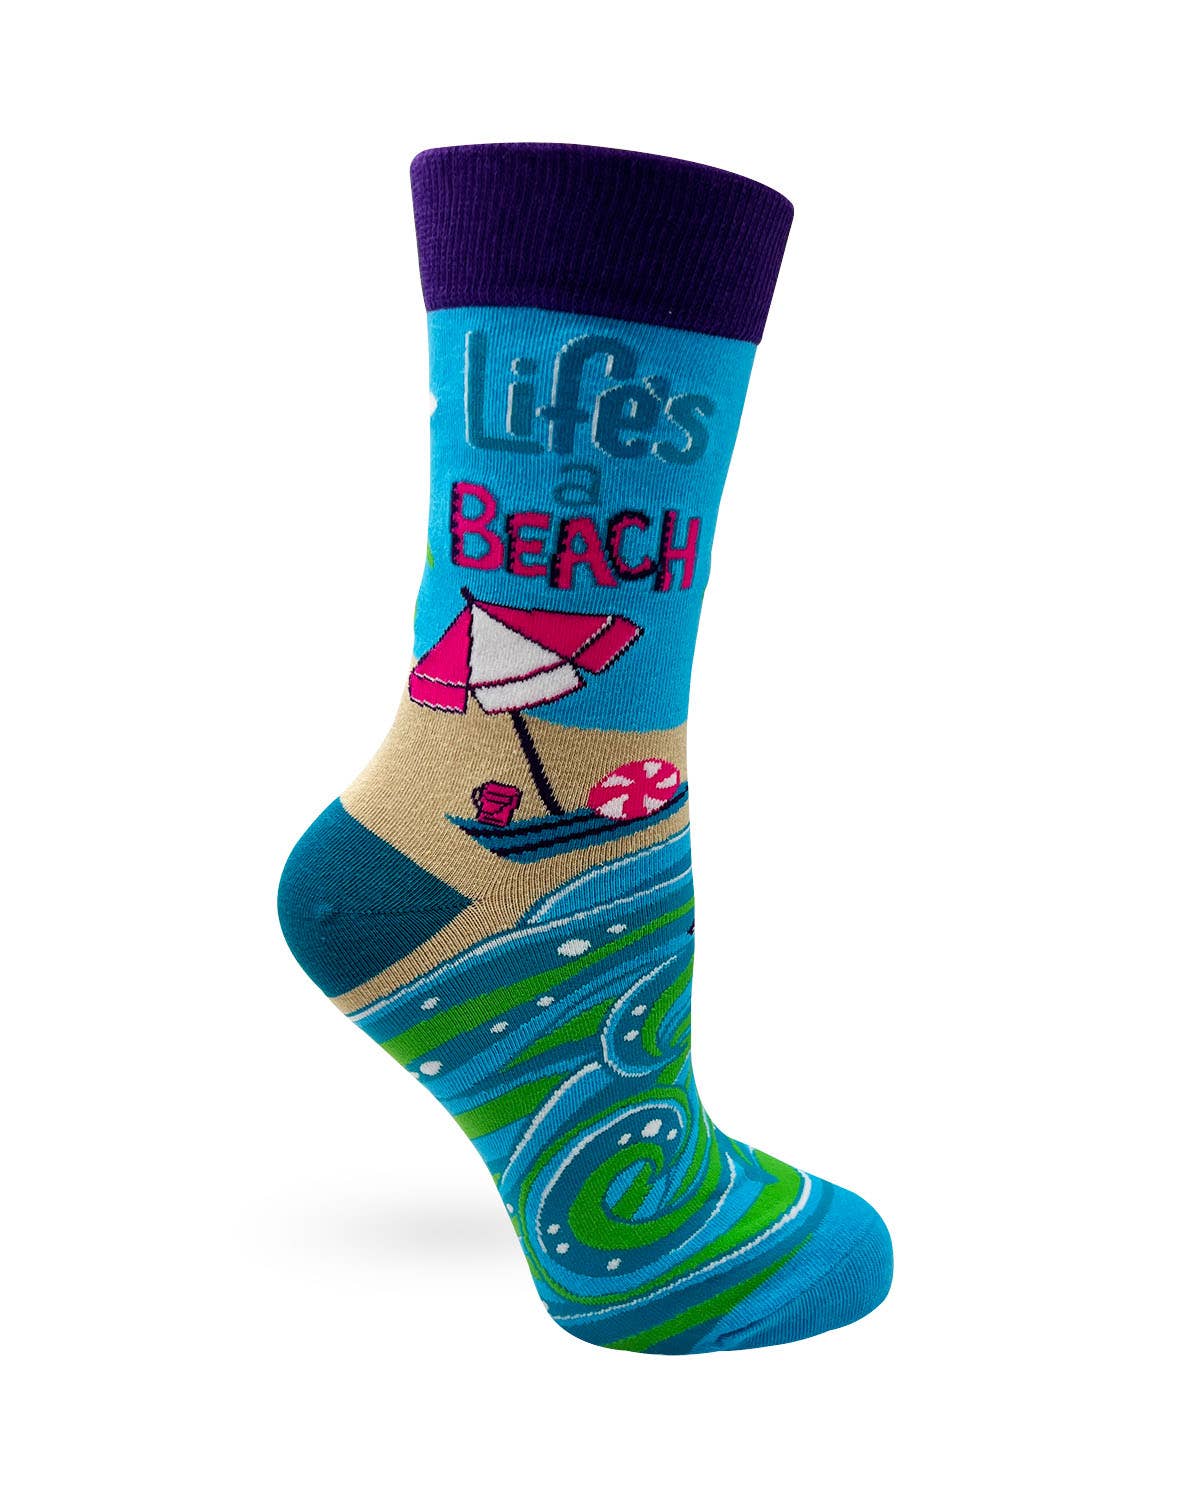 Life's a Beach Women's Crew Socks